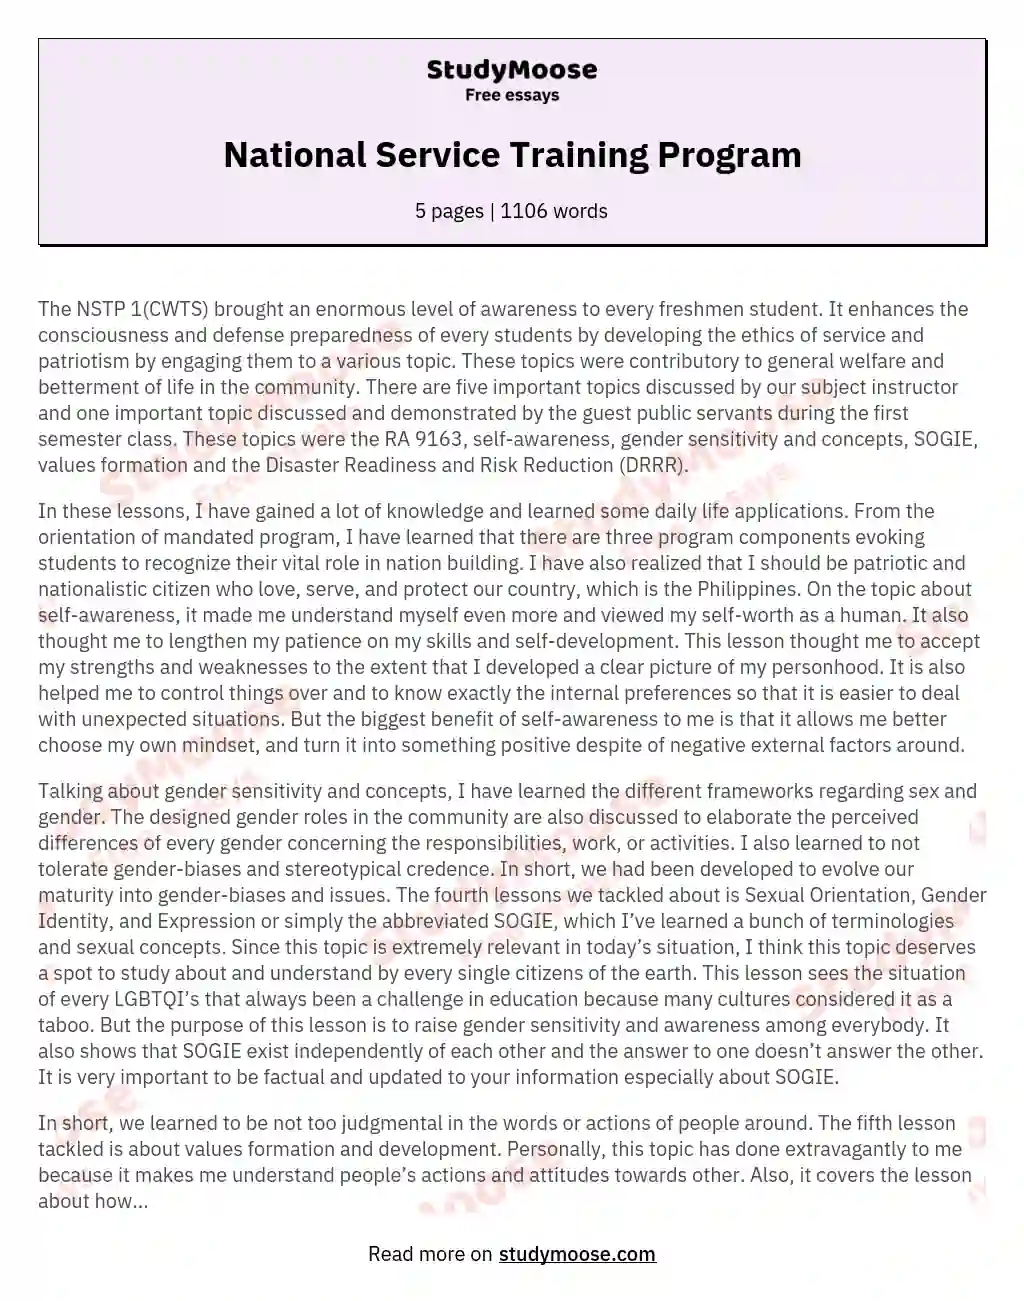 National Service Training Program essay